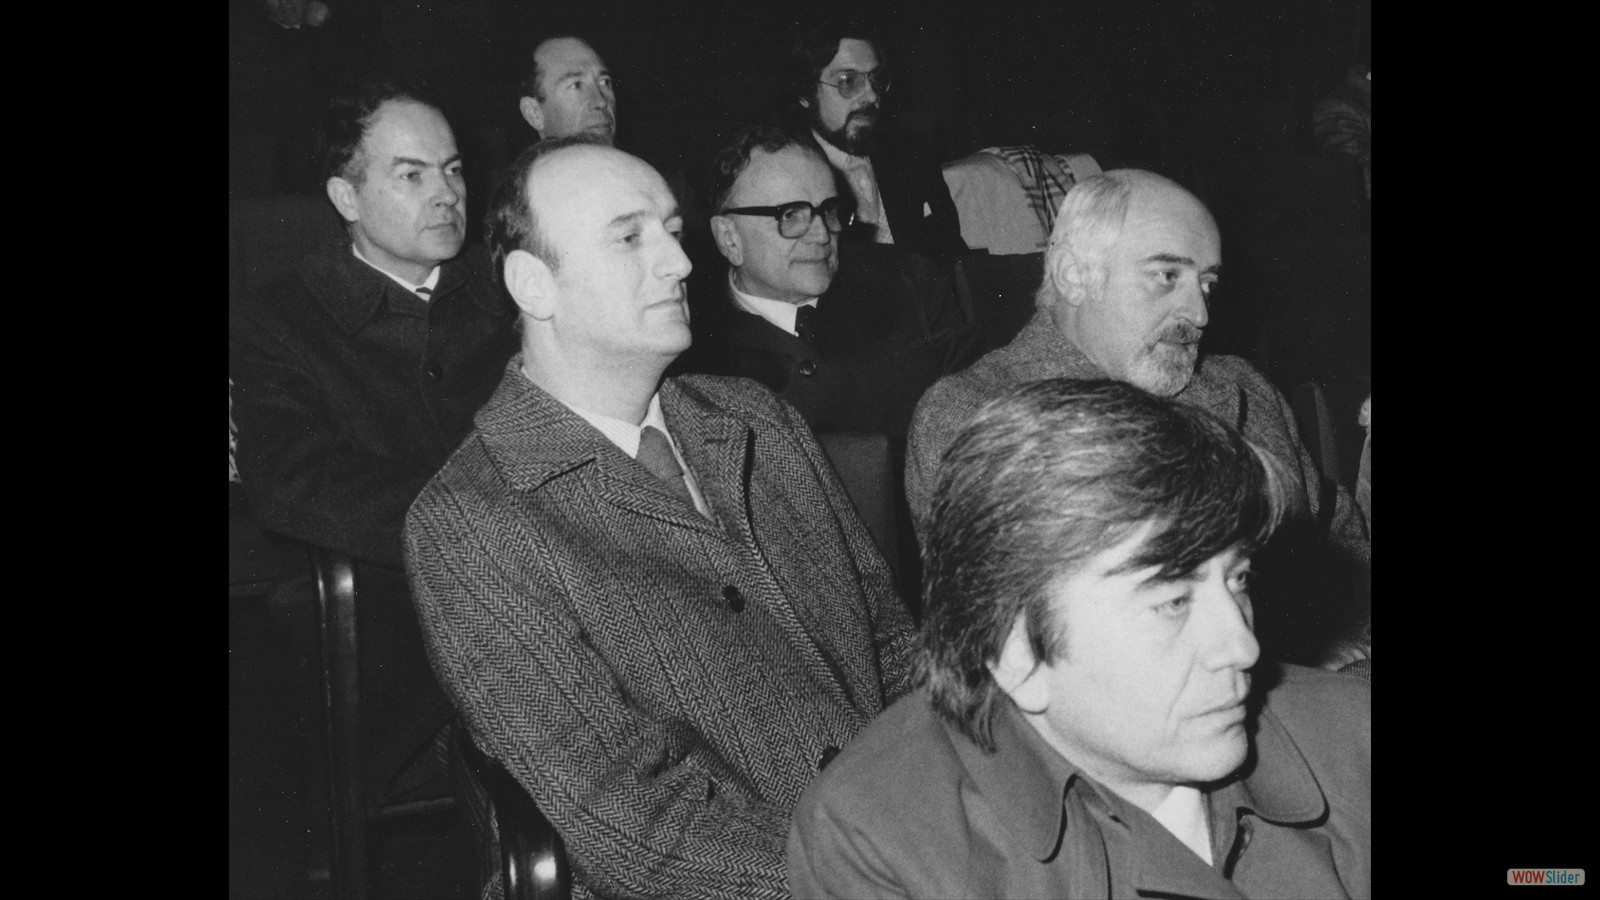 1st AICAT Conference - Firenze 17-19 December 1979 (in the foreground Della Gatta)